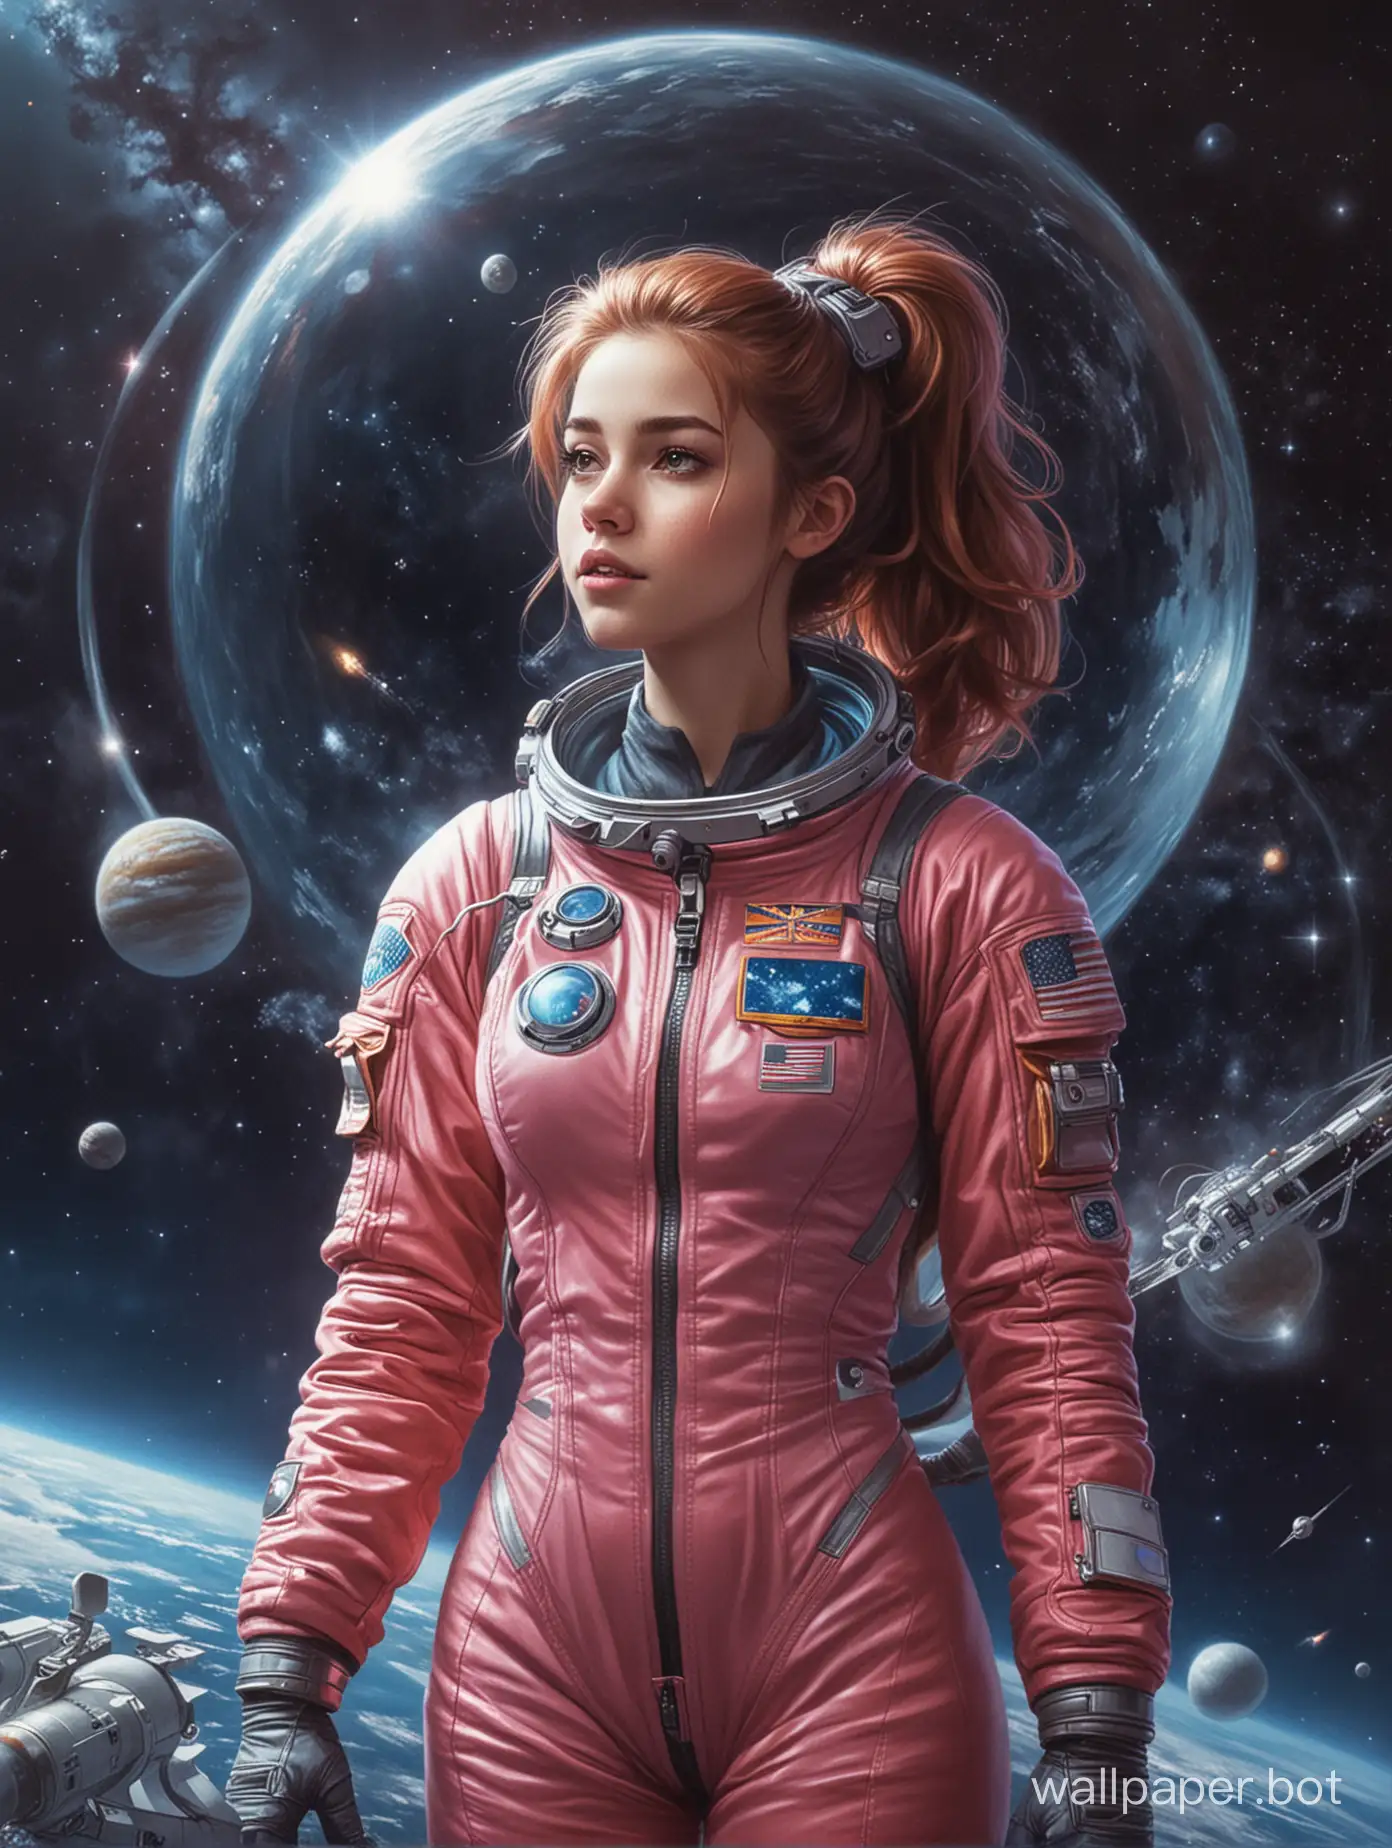 Futuristic-Girl-in-Space-Exploration